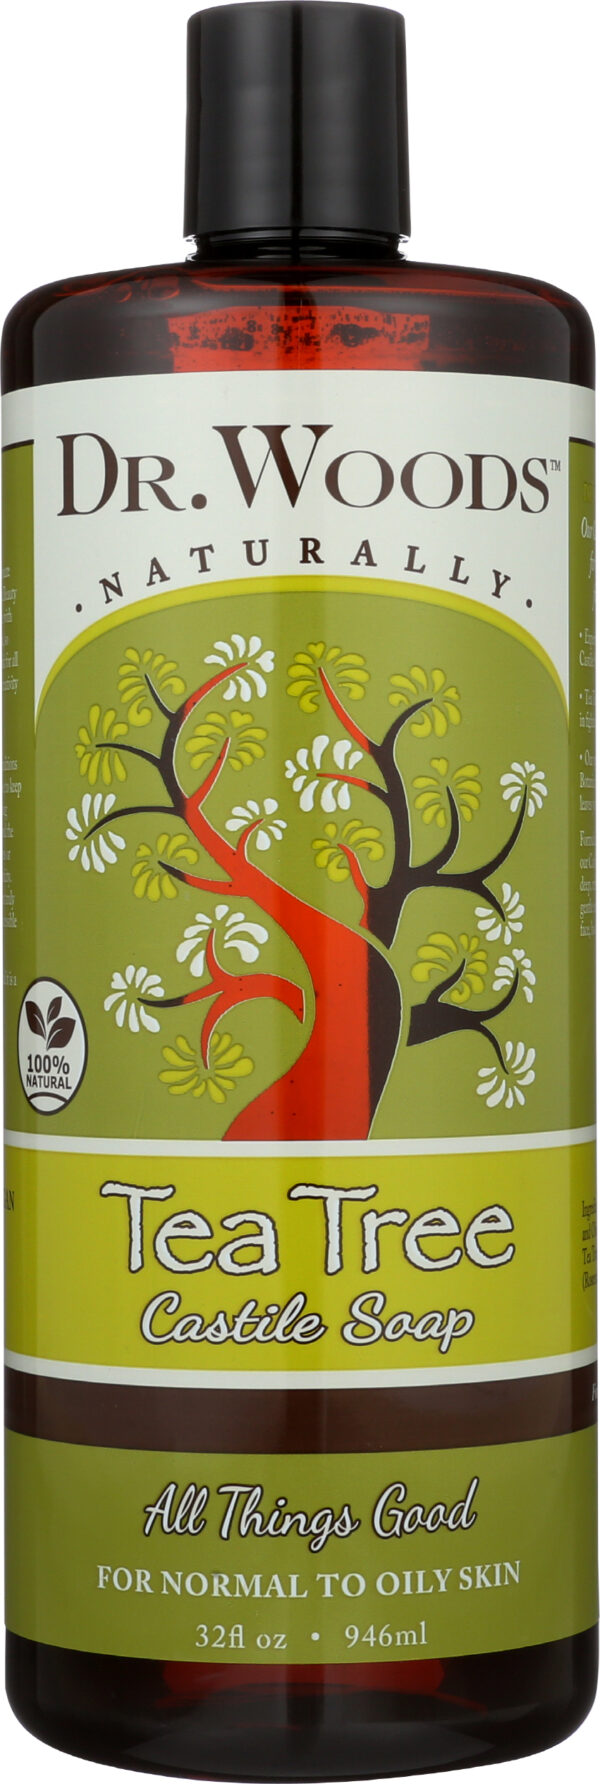 Tea Tree Castile Soap – 32 FL OZ